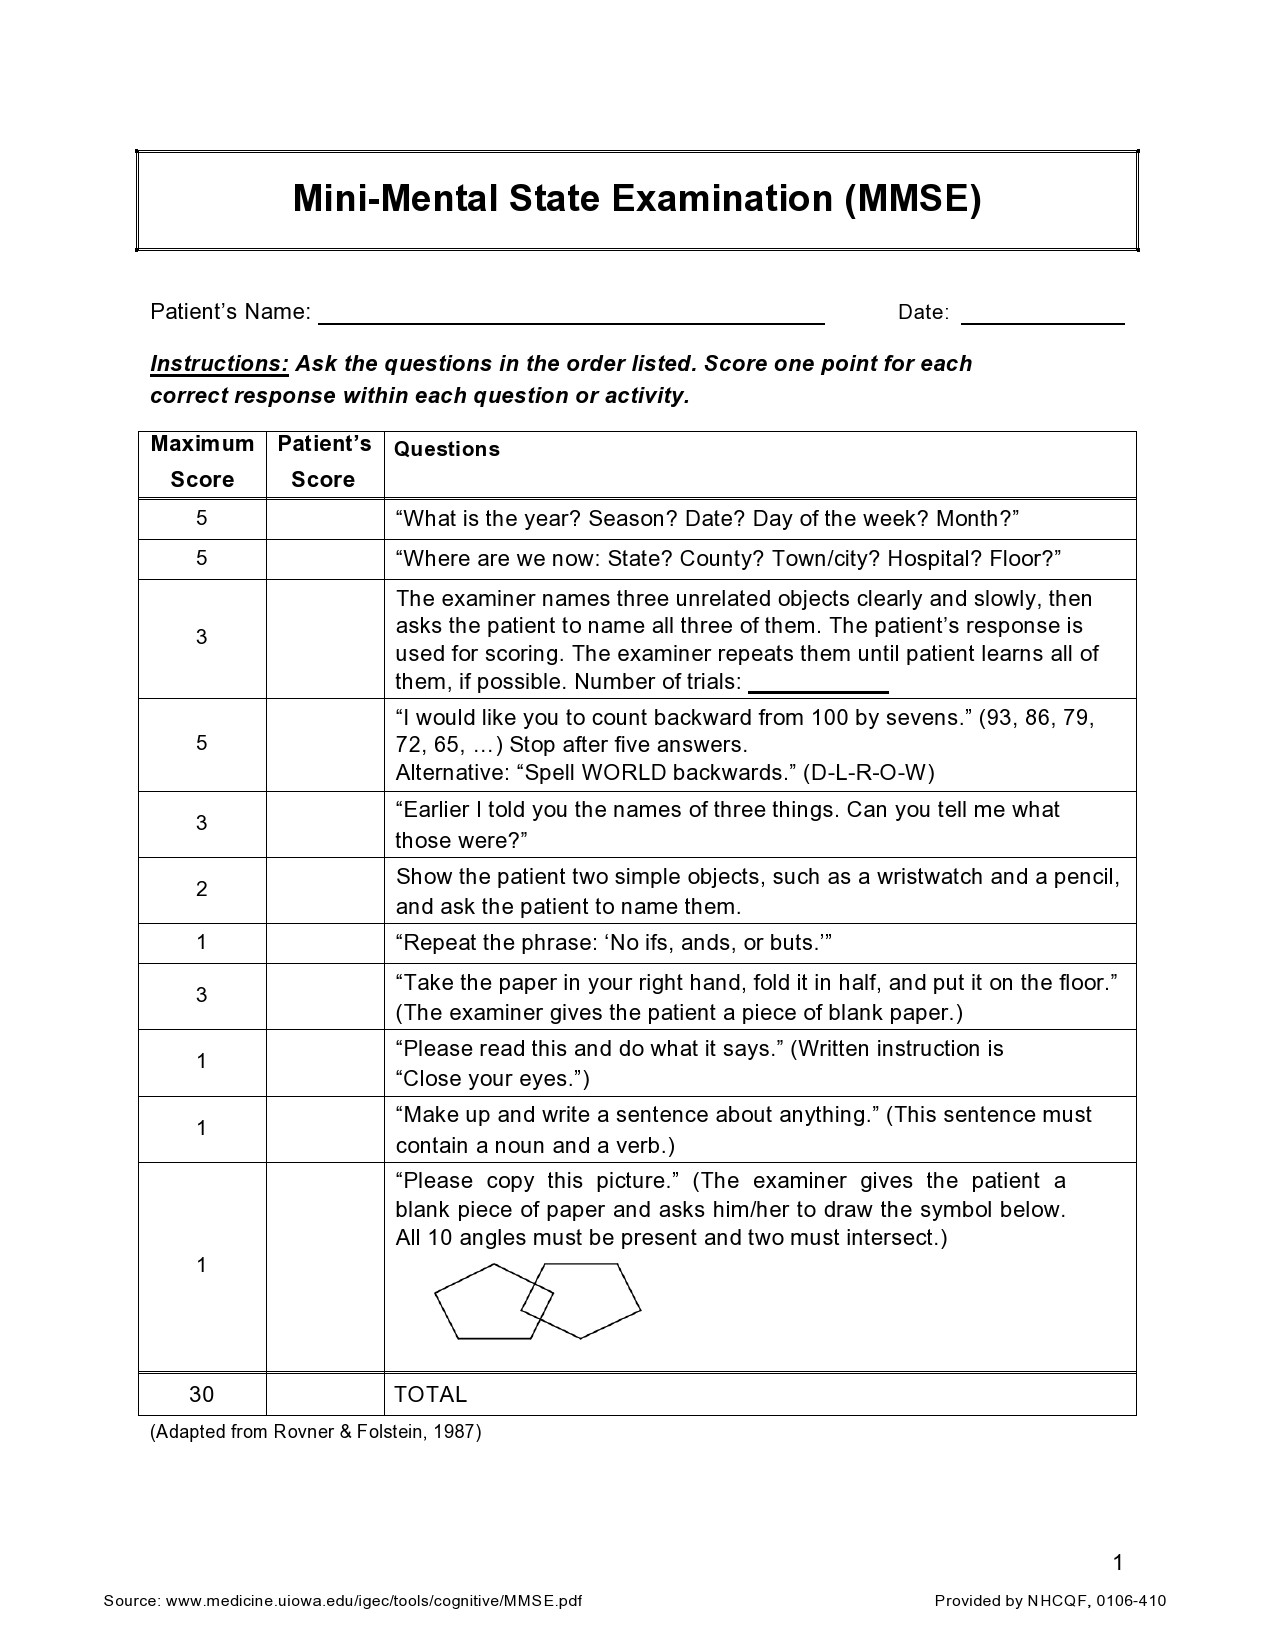 47 Free Mental Status Exam Templates (MSE Examples) ᐅ TemplateLab